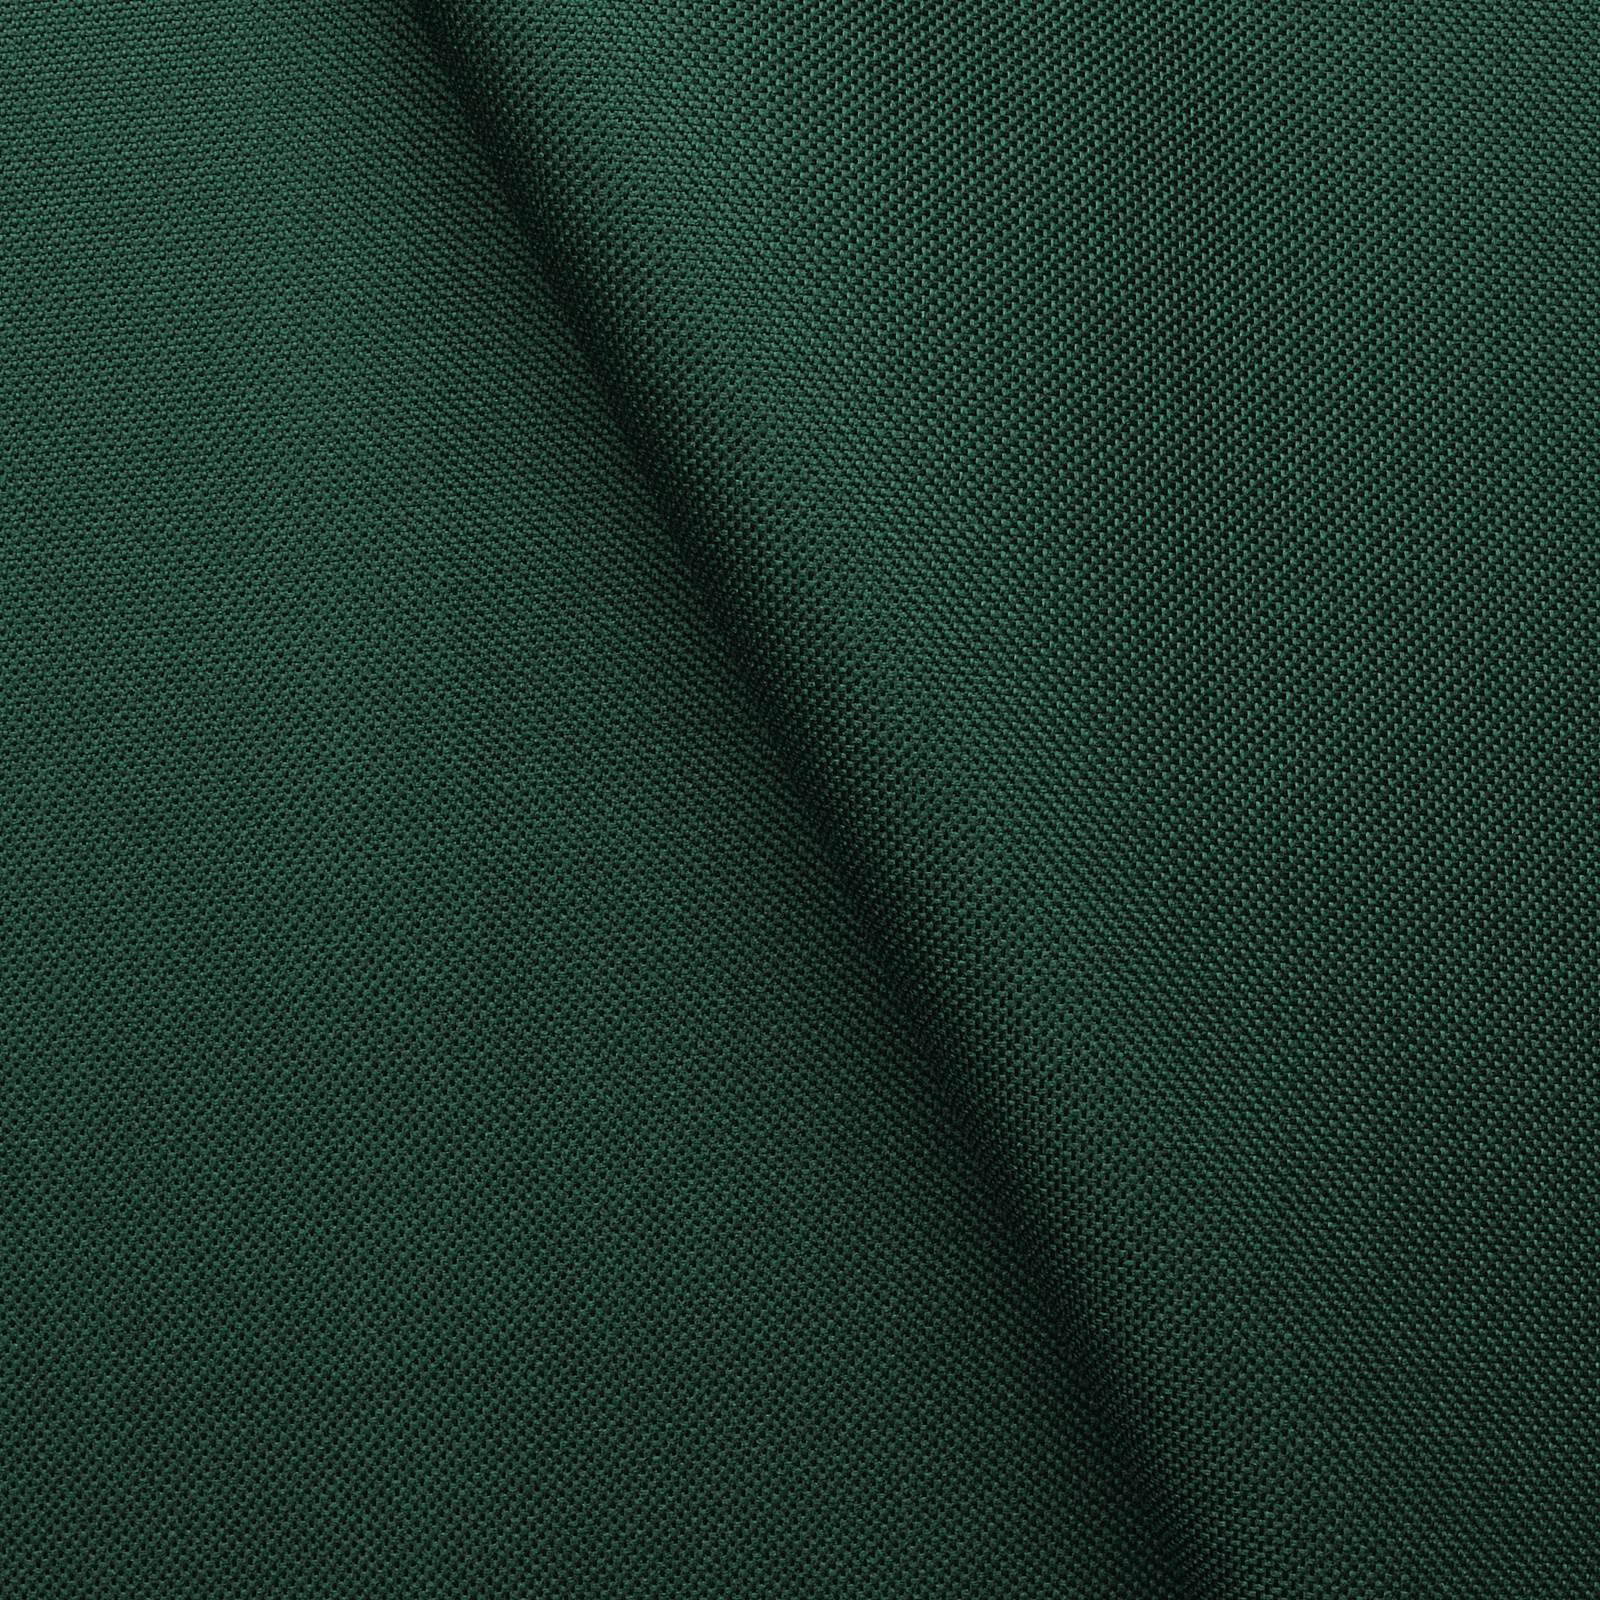 Breaker wasserdicht - dunkelgrün